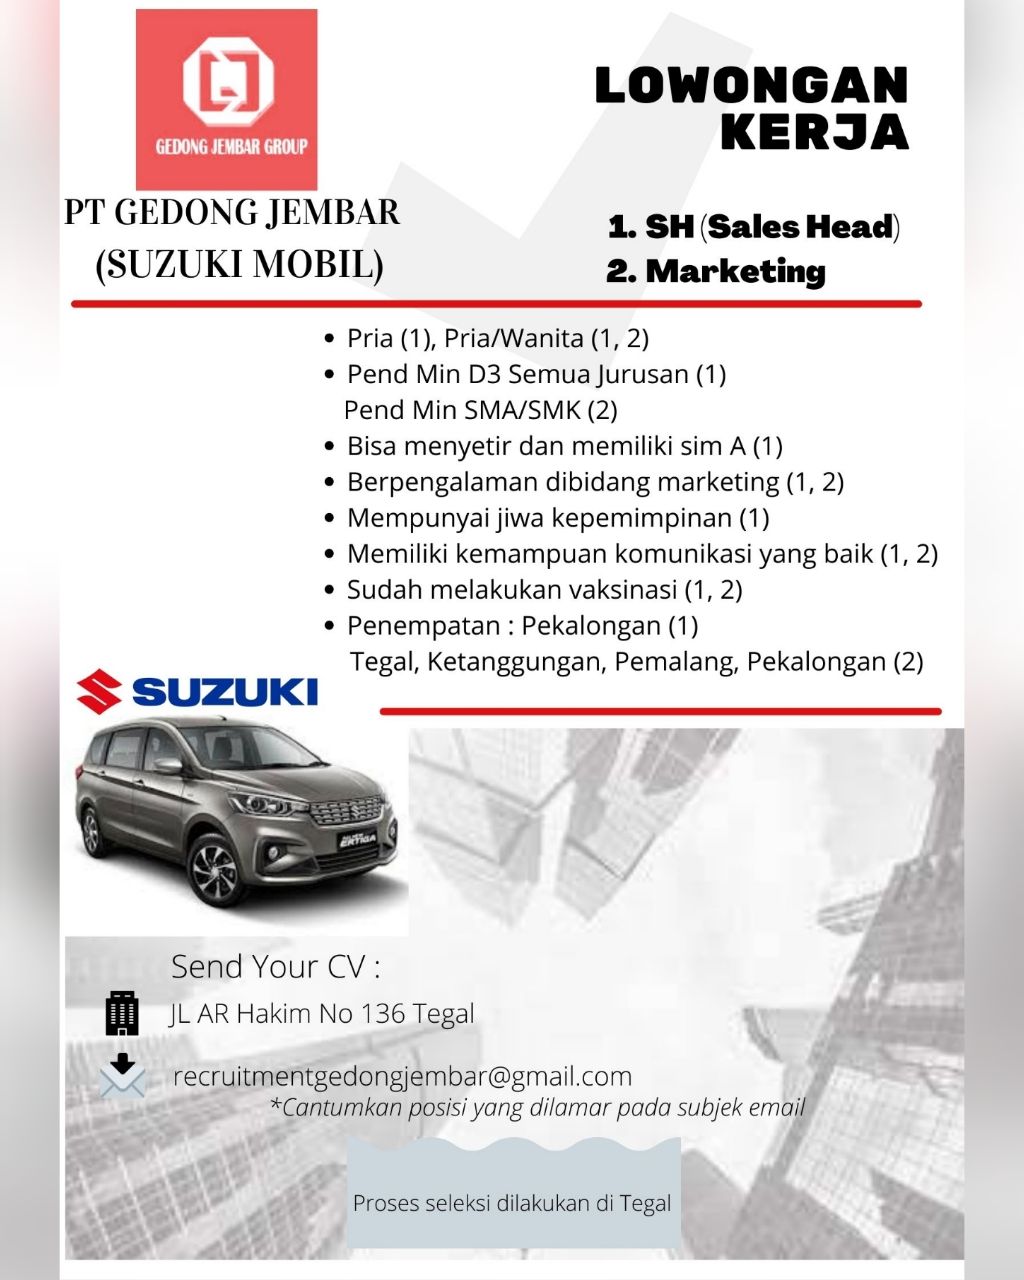 Lowongan Kerja Sales Head & Marketing di PT Gedong Jembar (Suzuki Mobil)